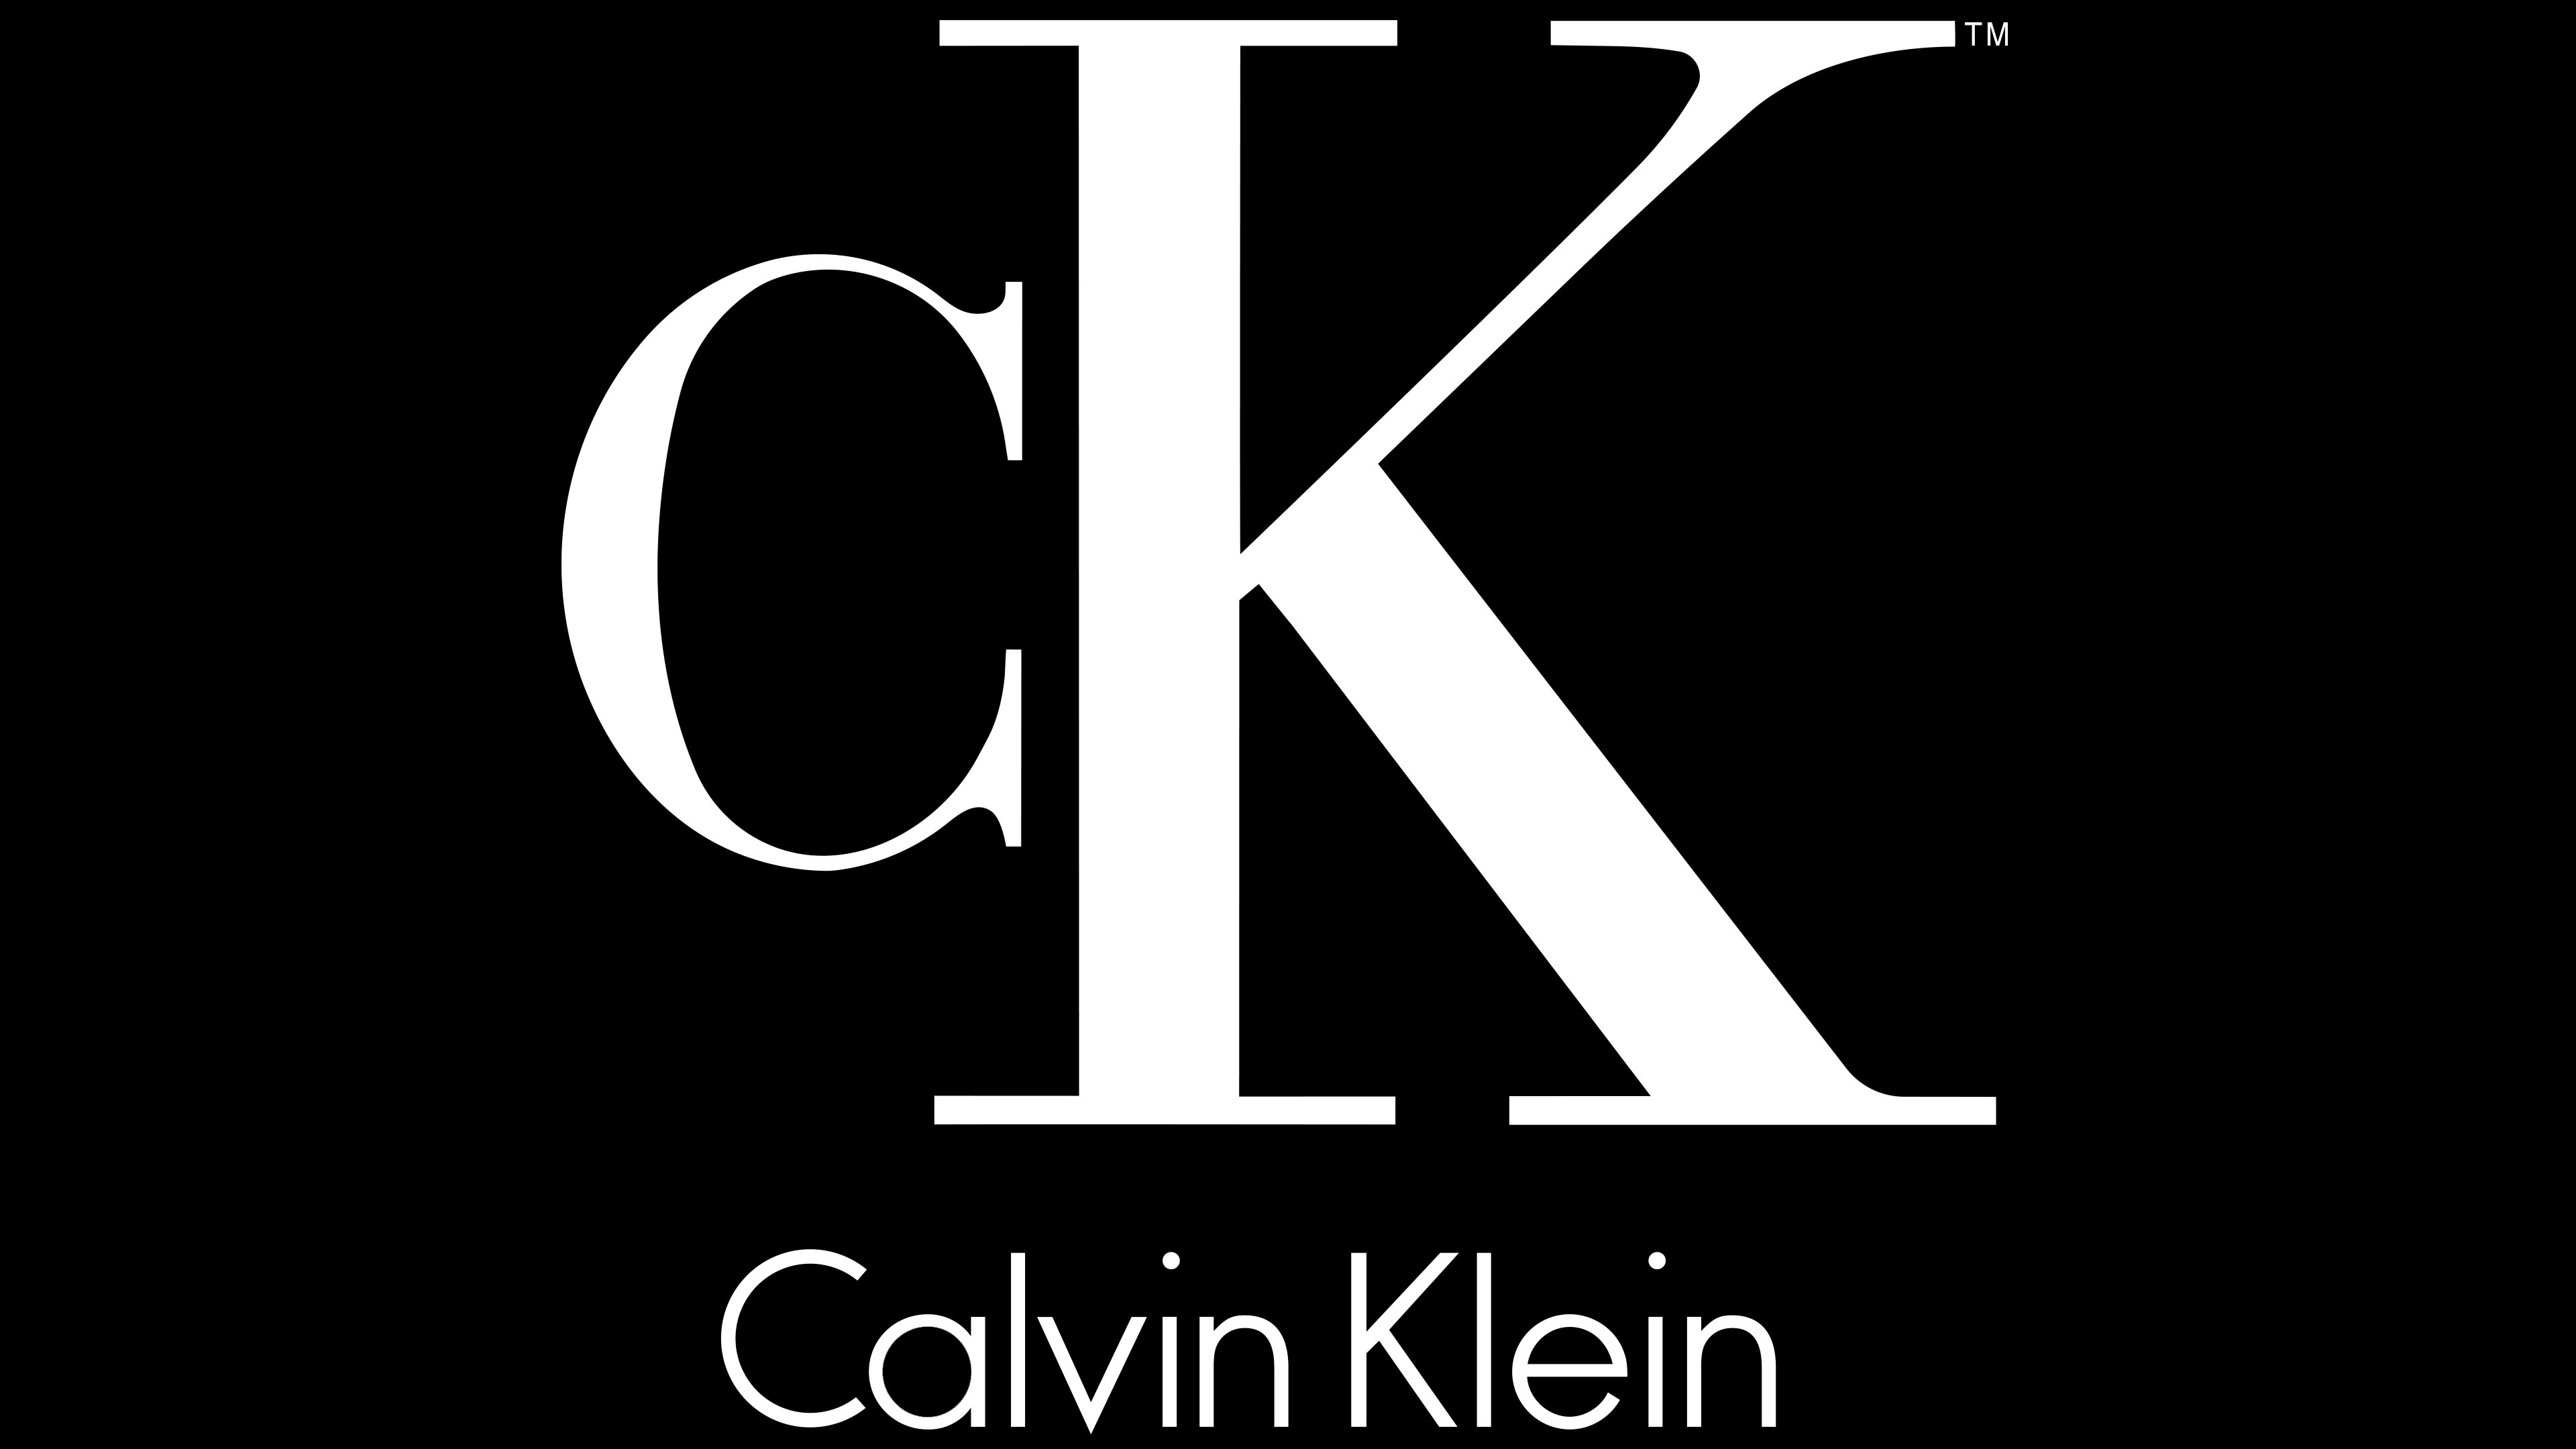 Introduzir 76+ imagem fotos de roupas da marca calvin klein - br ...